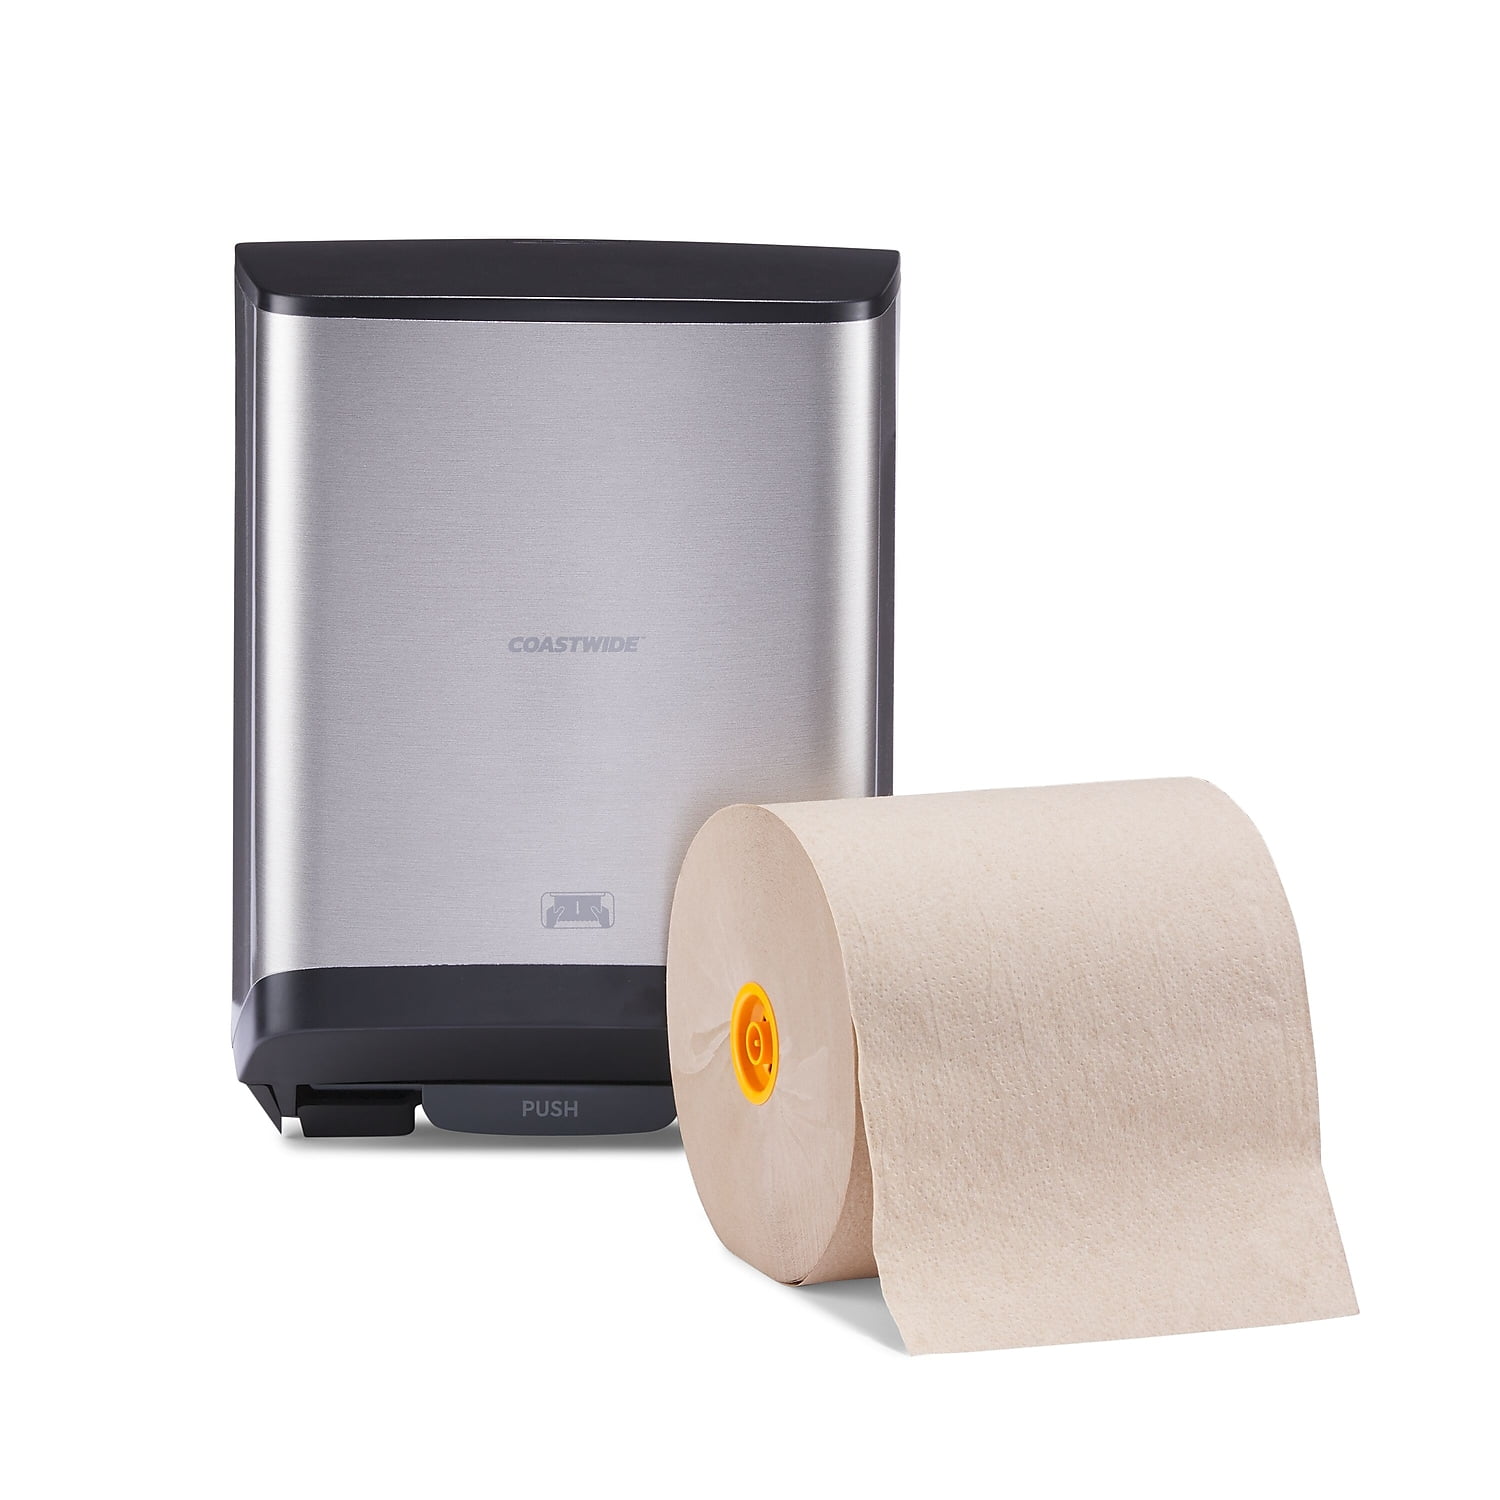 Coastwide Professional J-Series Auto-Cut Hardwound Paper Towel Dispenser, 12.32 x 9.34 x 16.67, Black/Metallic